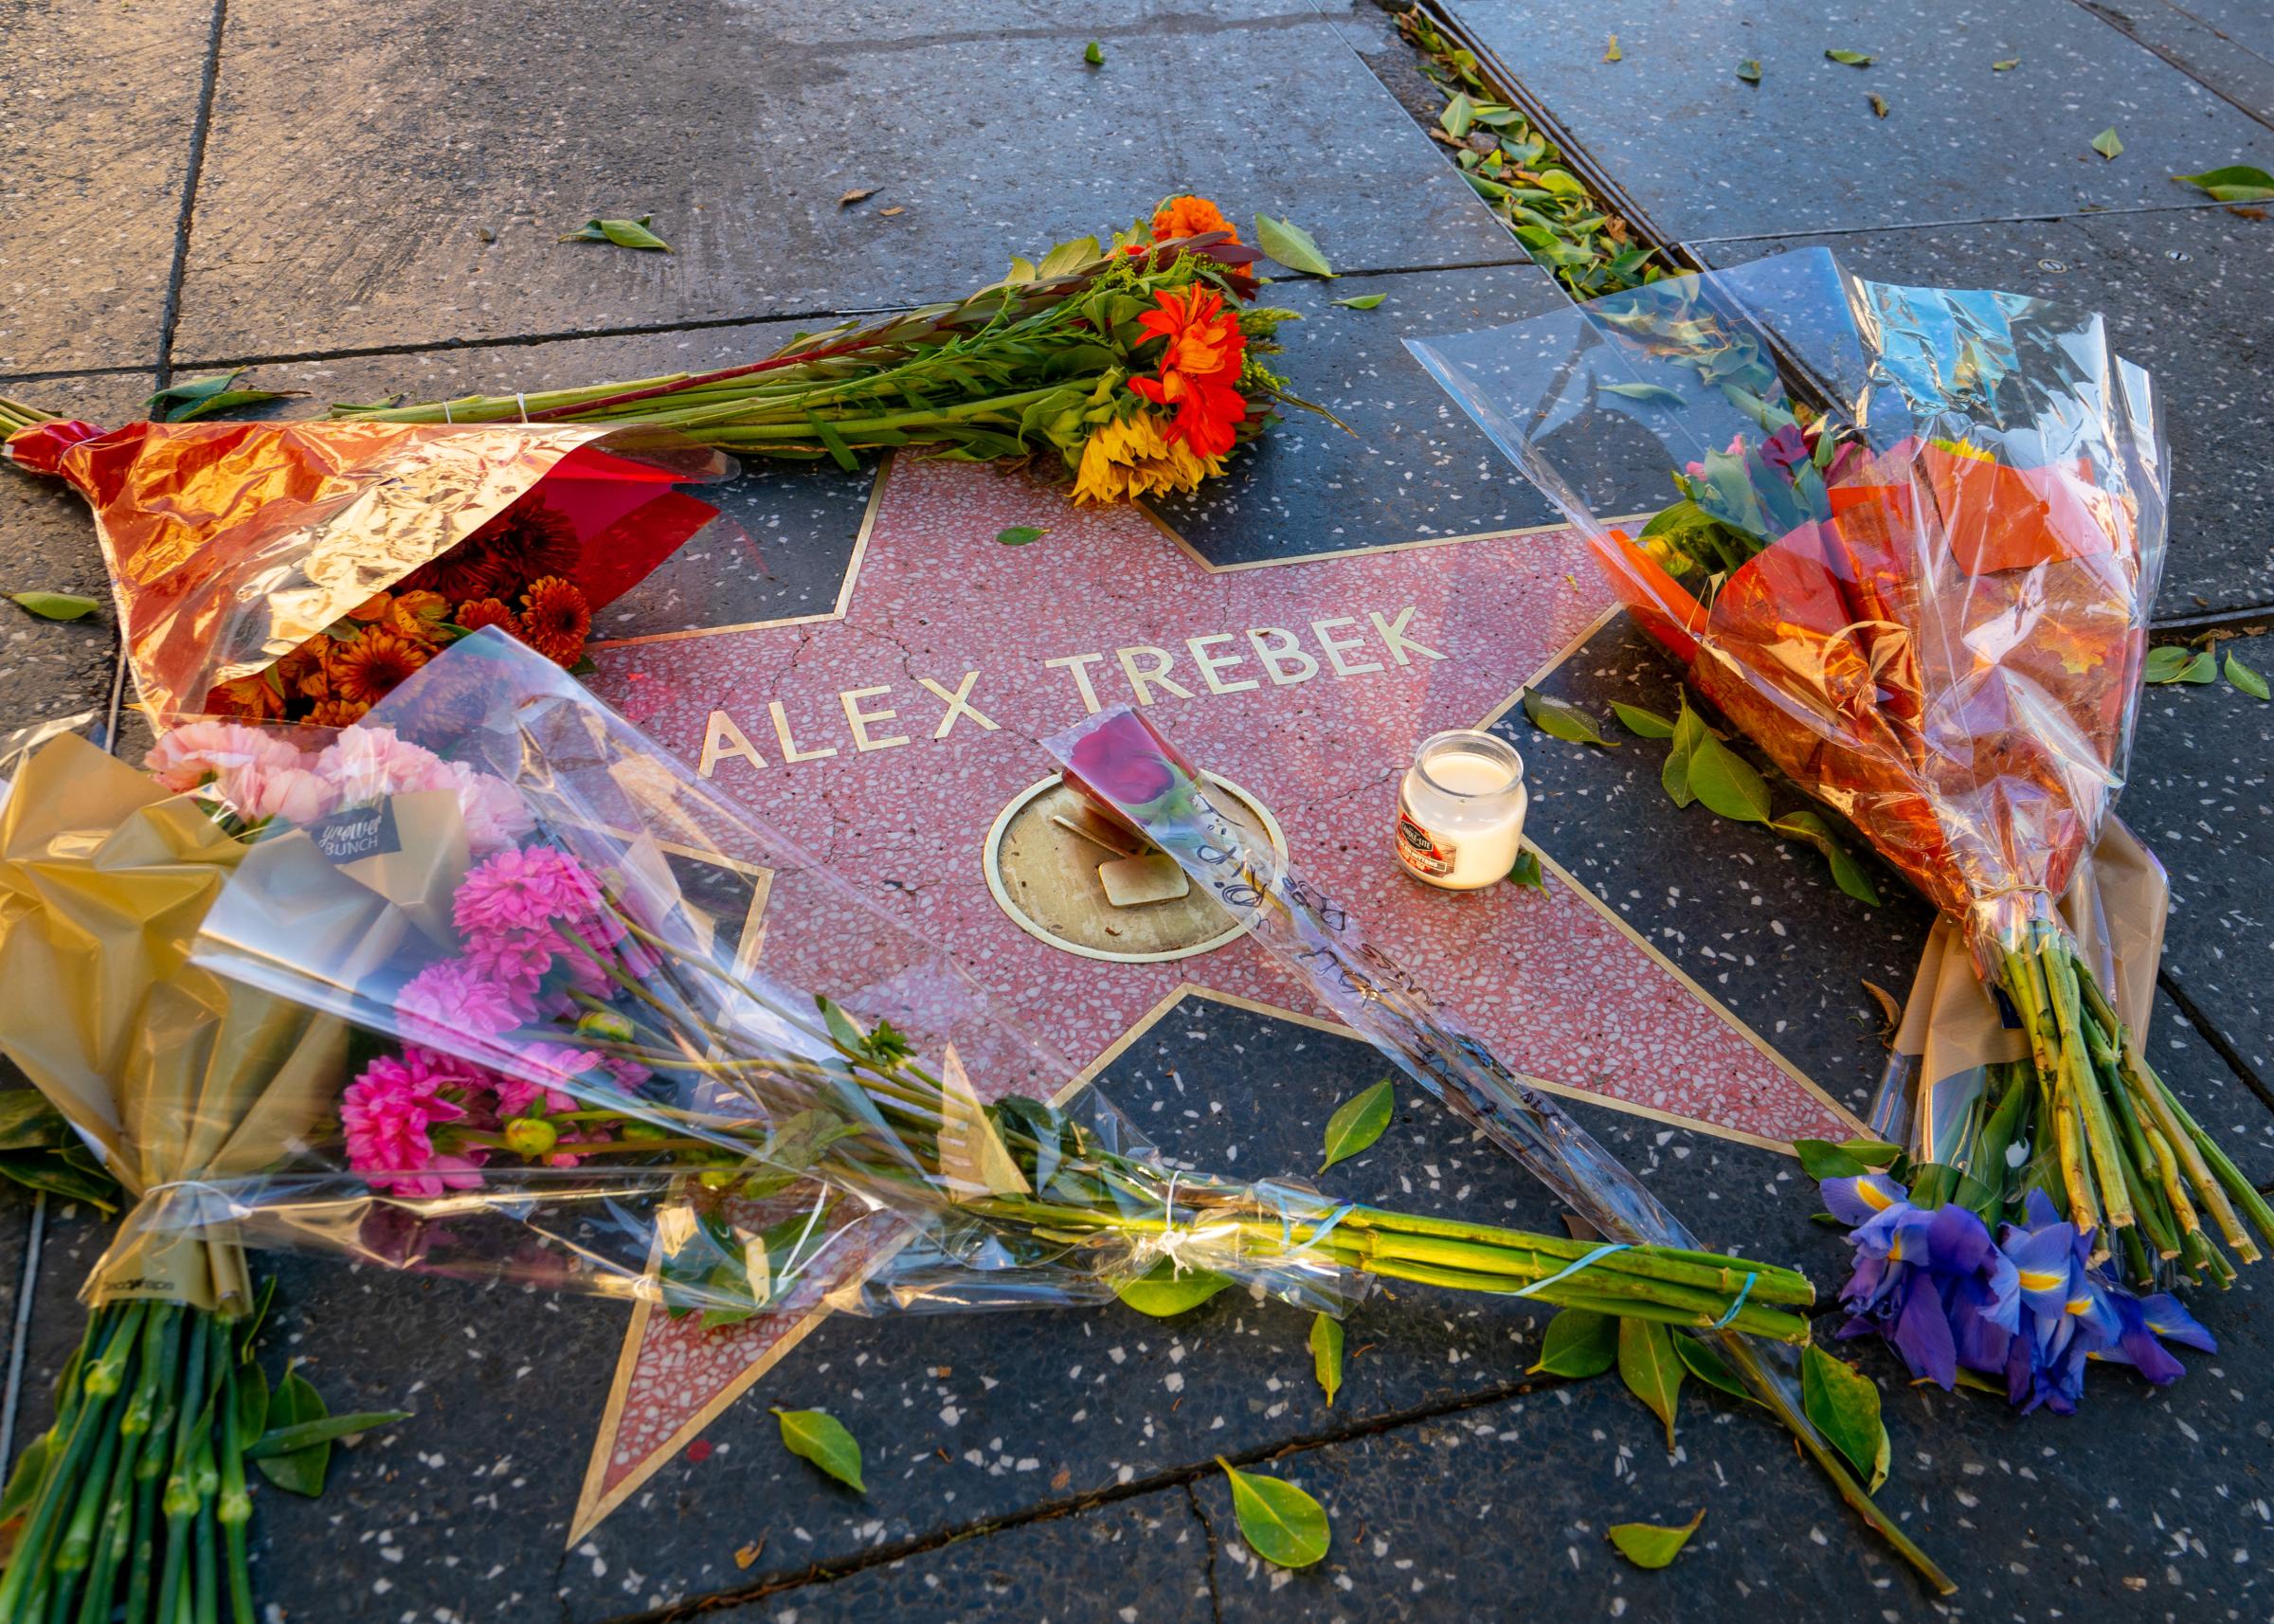 Alex Trebek's star on the Hollywood Walk of Fame